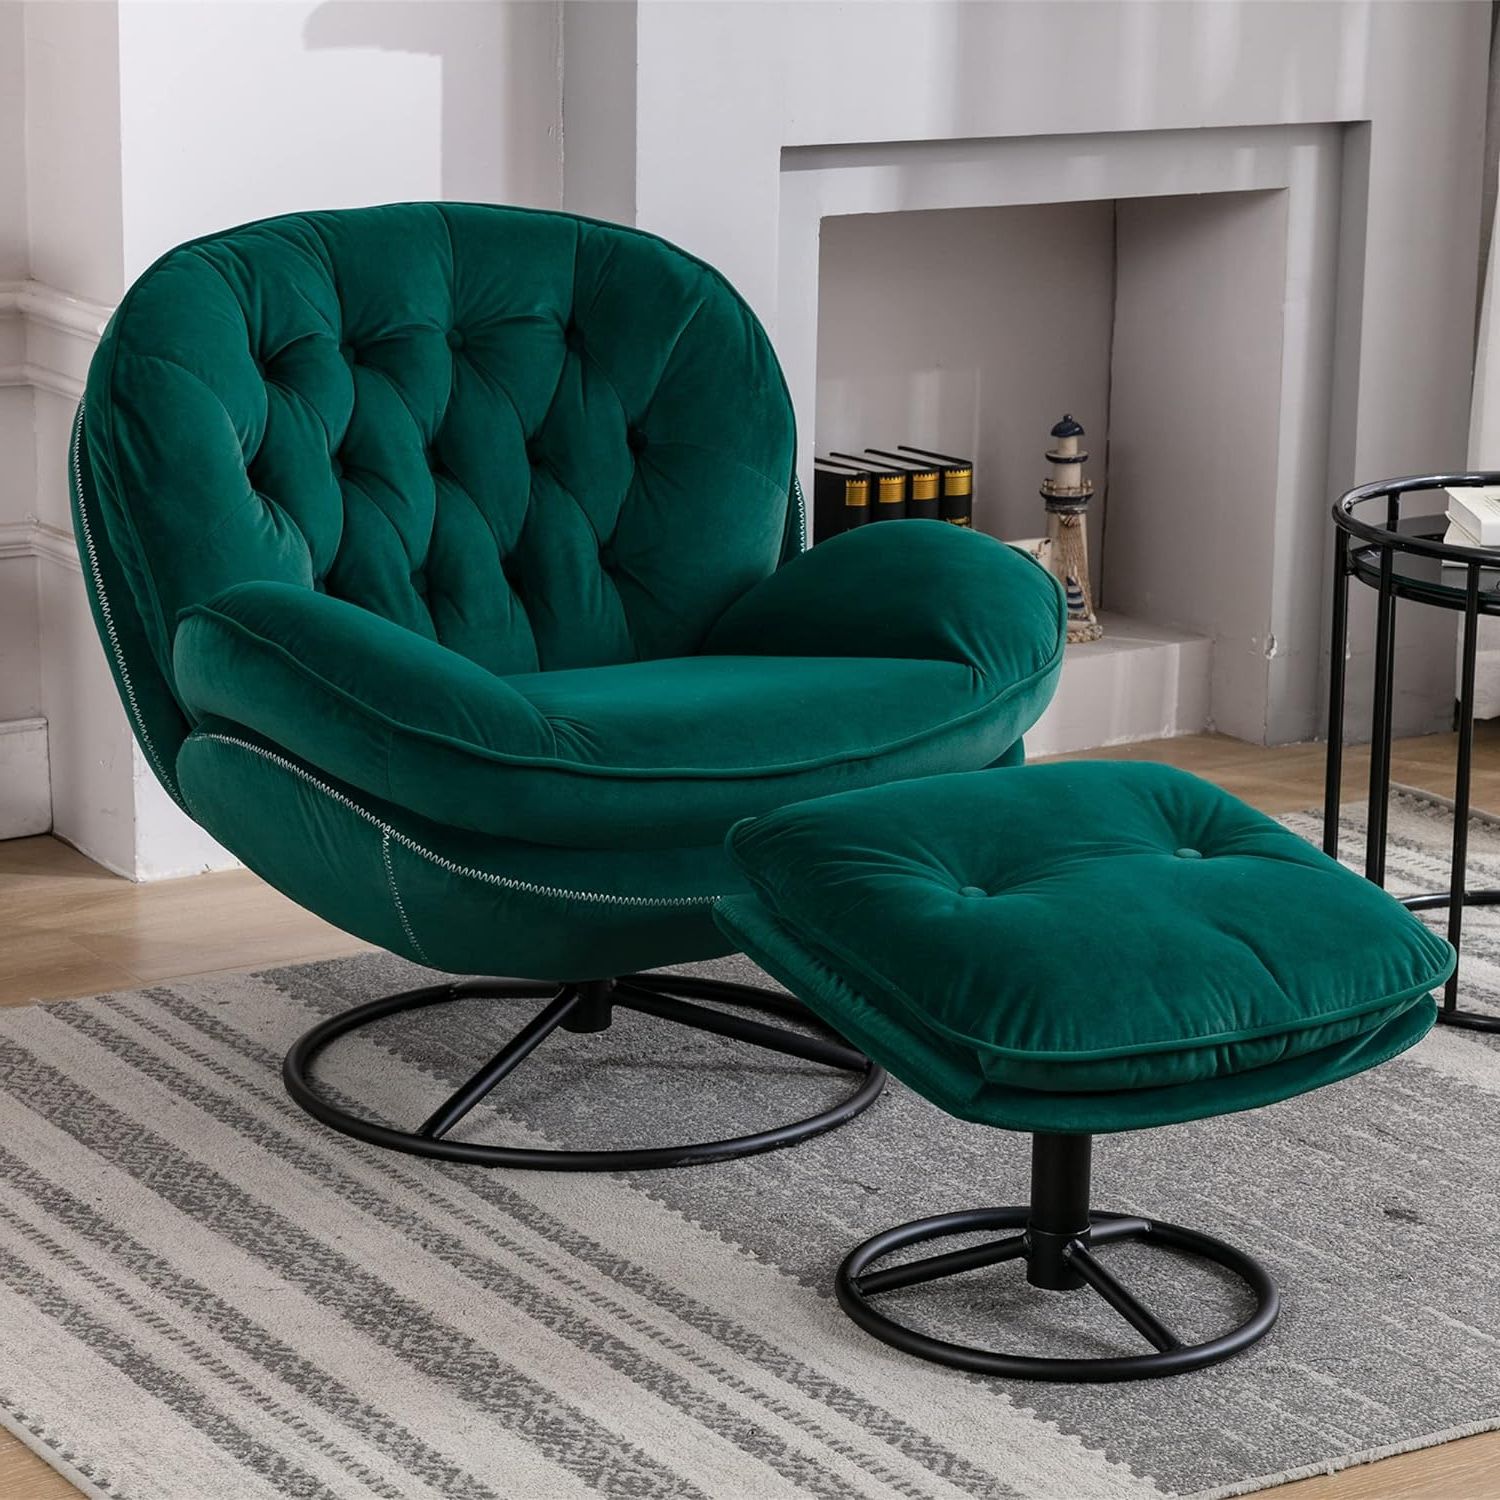 2017 Modern Velvet Upholstered Recliner Chairs Intended For Buy Velvet Swivel Accent Chair With Ottoman Set, Modern Lounge Chair (View 11 of 15)